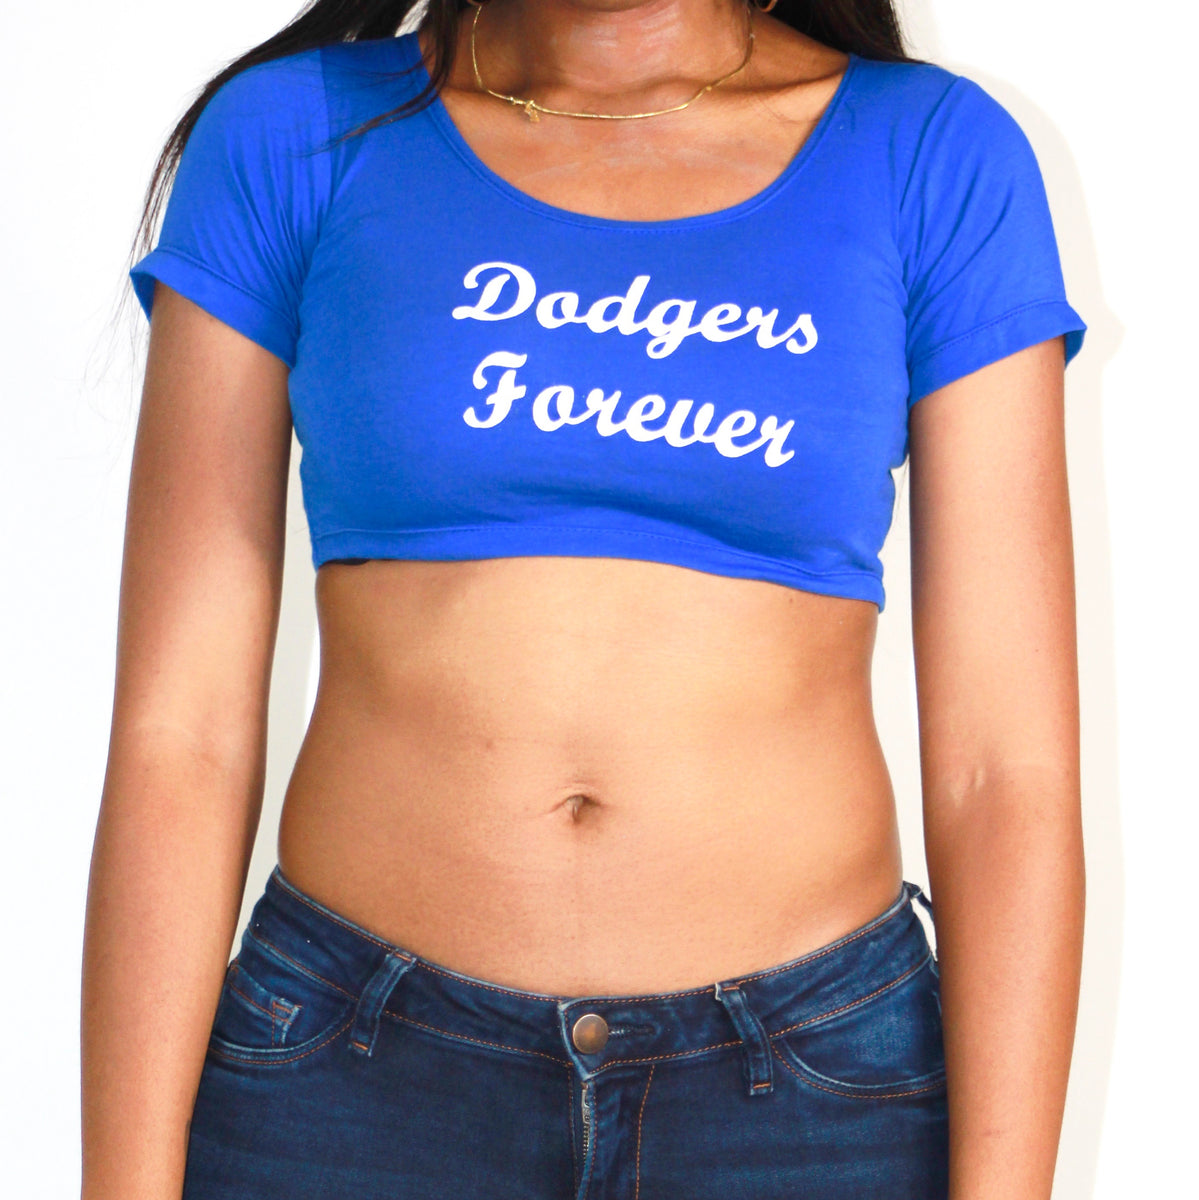 Dodgers Forever Blue Short Sleeve Crop Top – Lyla's Crop Tops